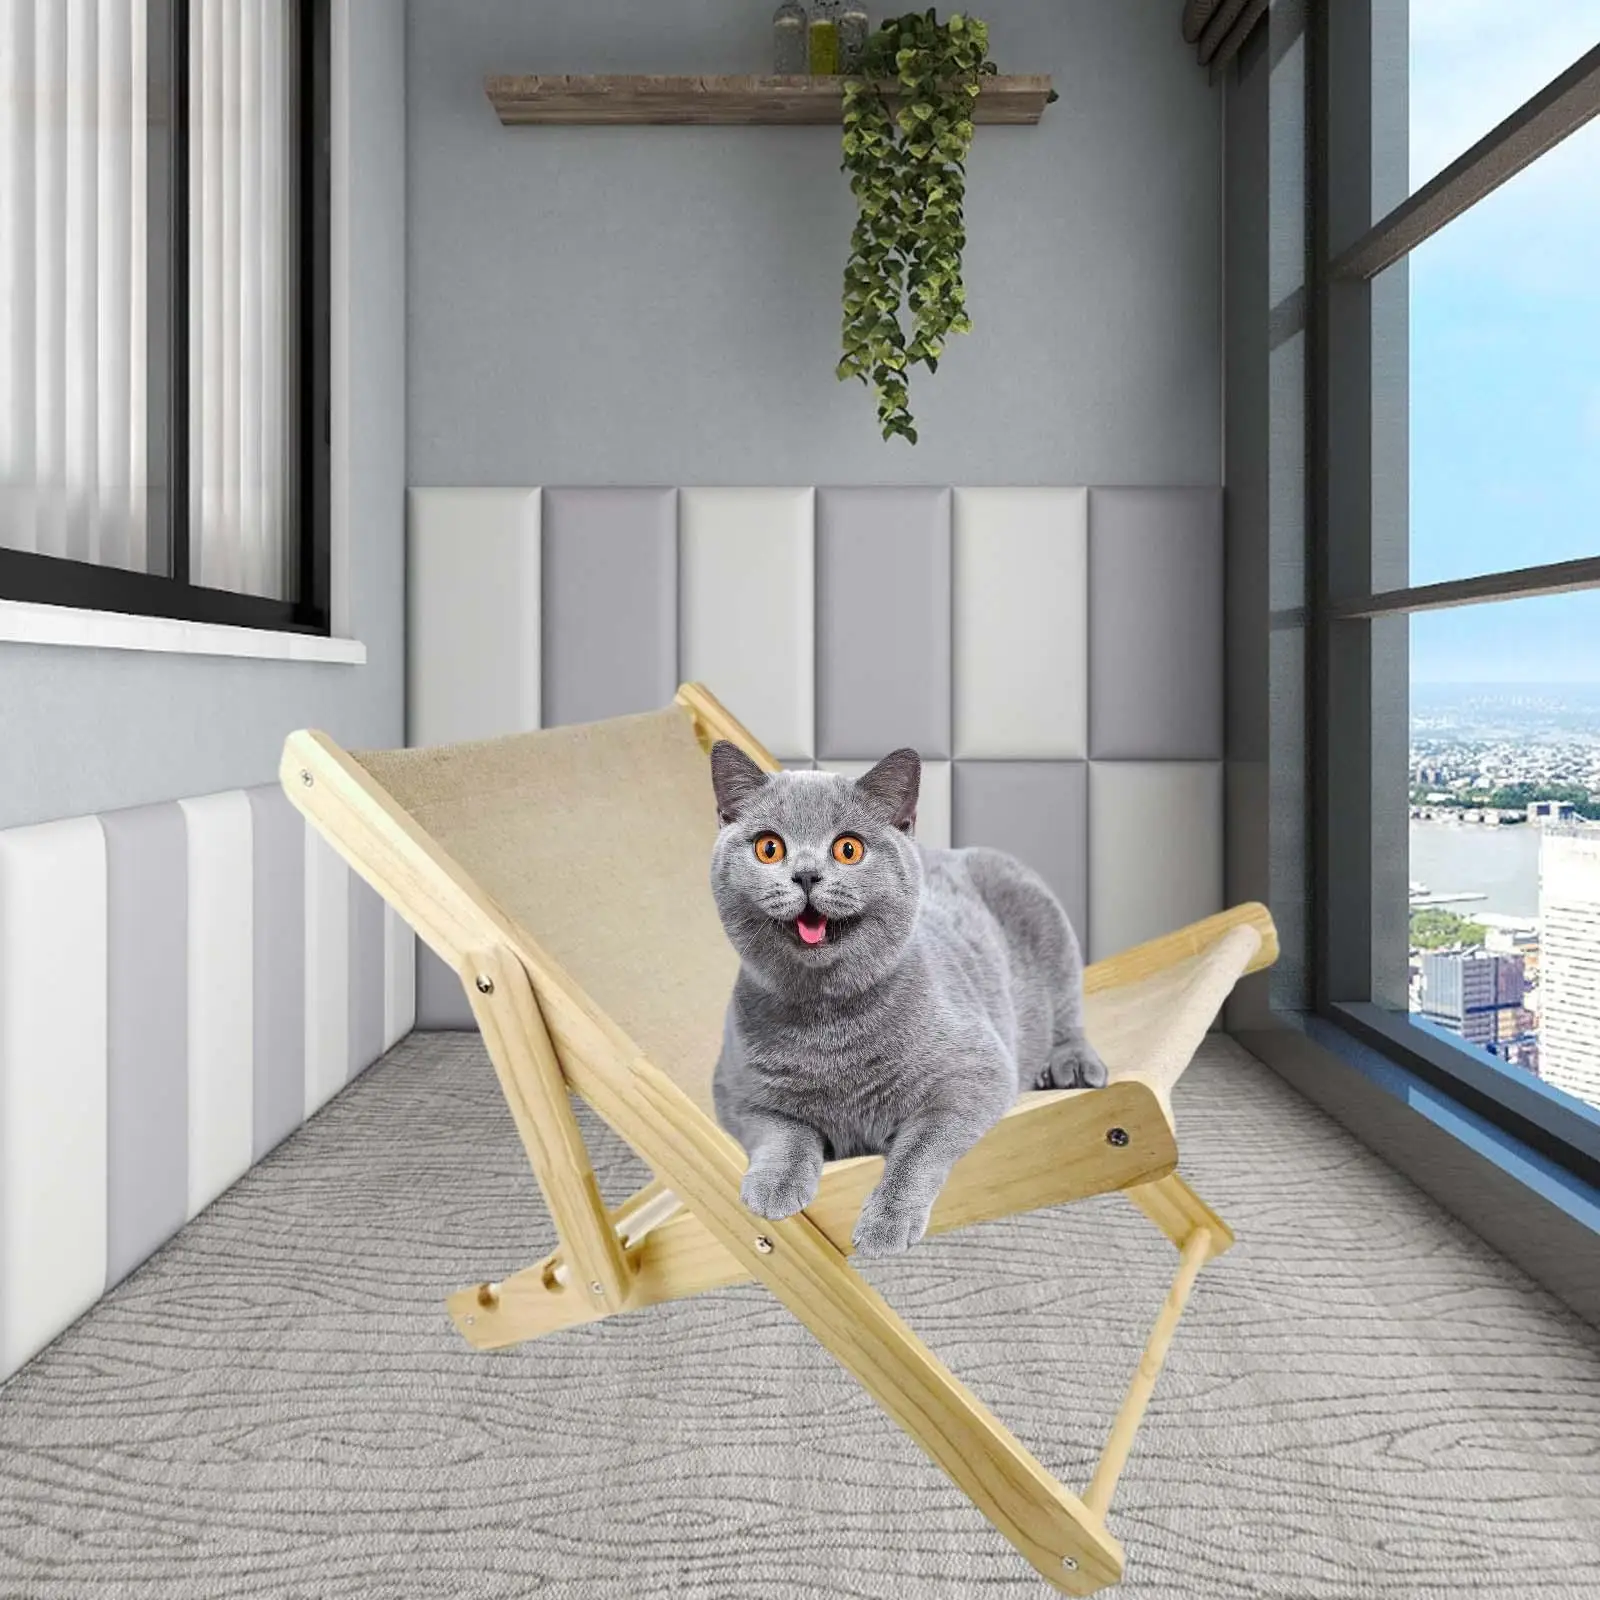 Cat Hammock Bed Cat Lounge Chair Floor Standing Furniture Protector Comfortable for Kitten Rabbit Bunny Small Animal Indoor Cats